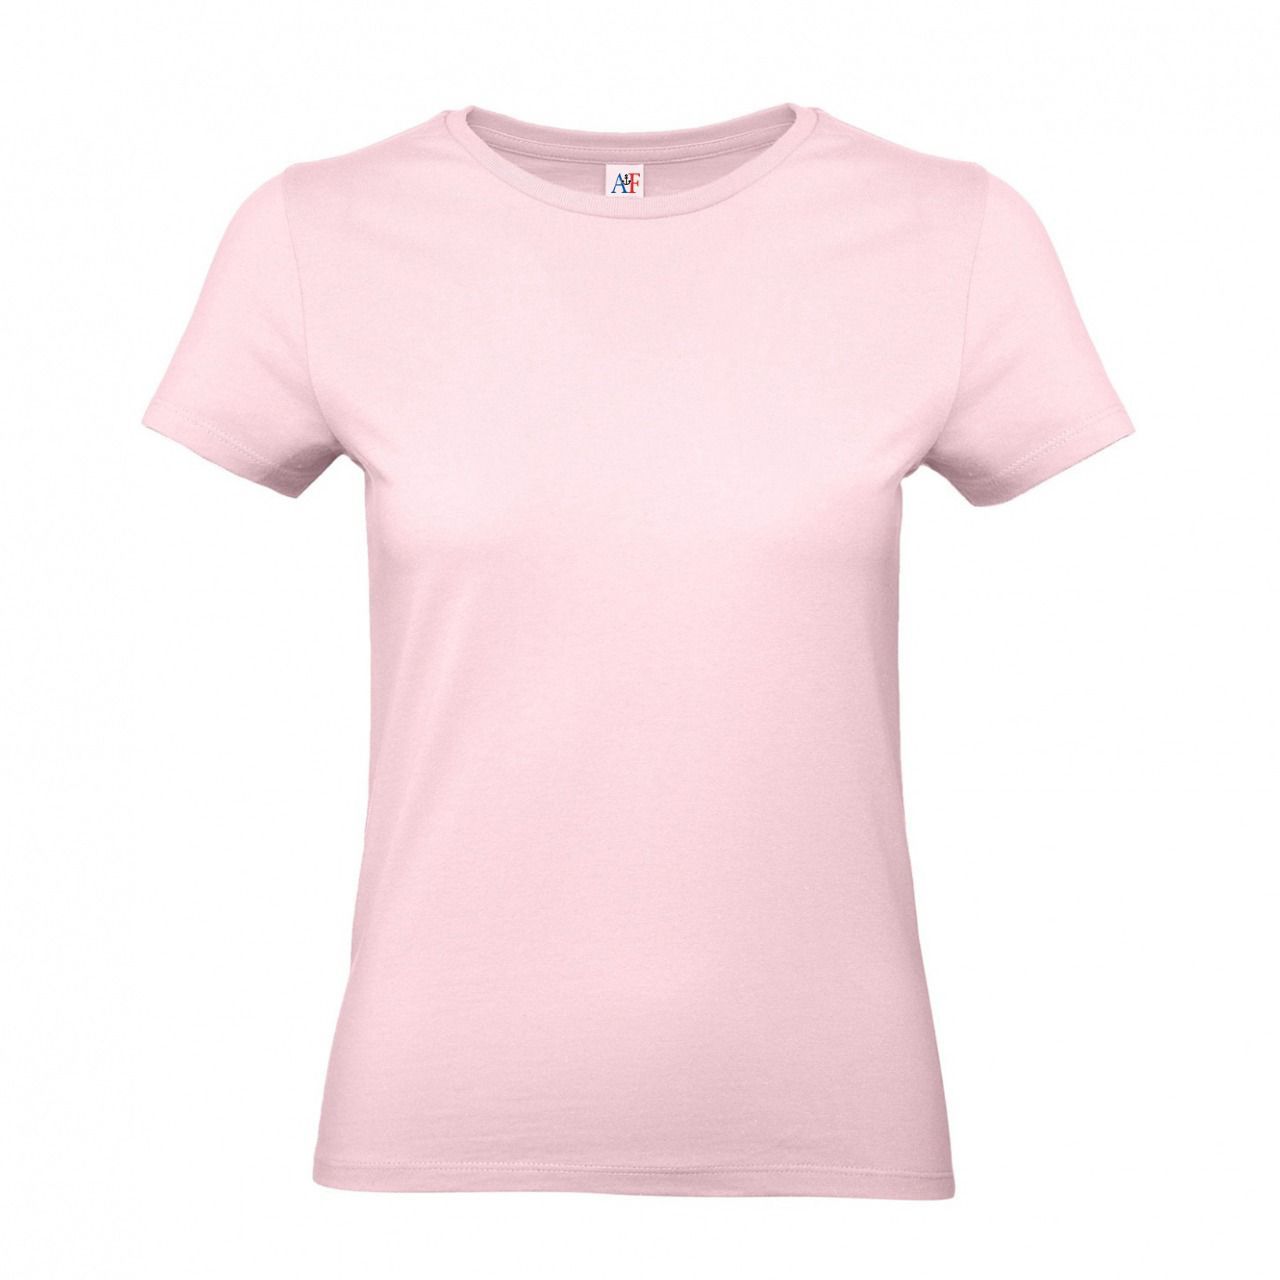 1005 Women's Fit Tee 4.3 Oz - Baby Pink Color - AF APPARELS(USA)